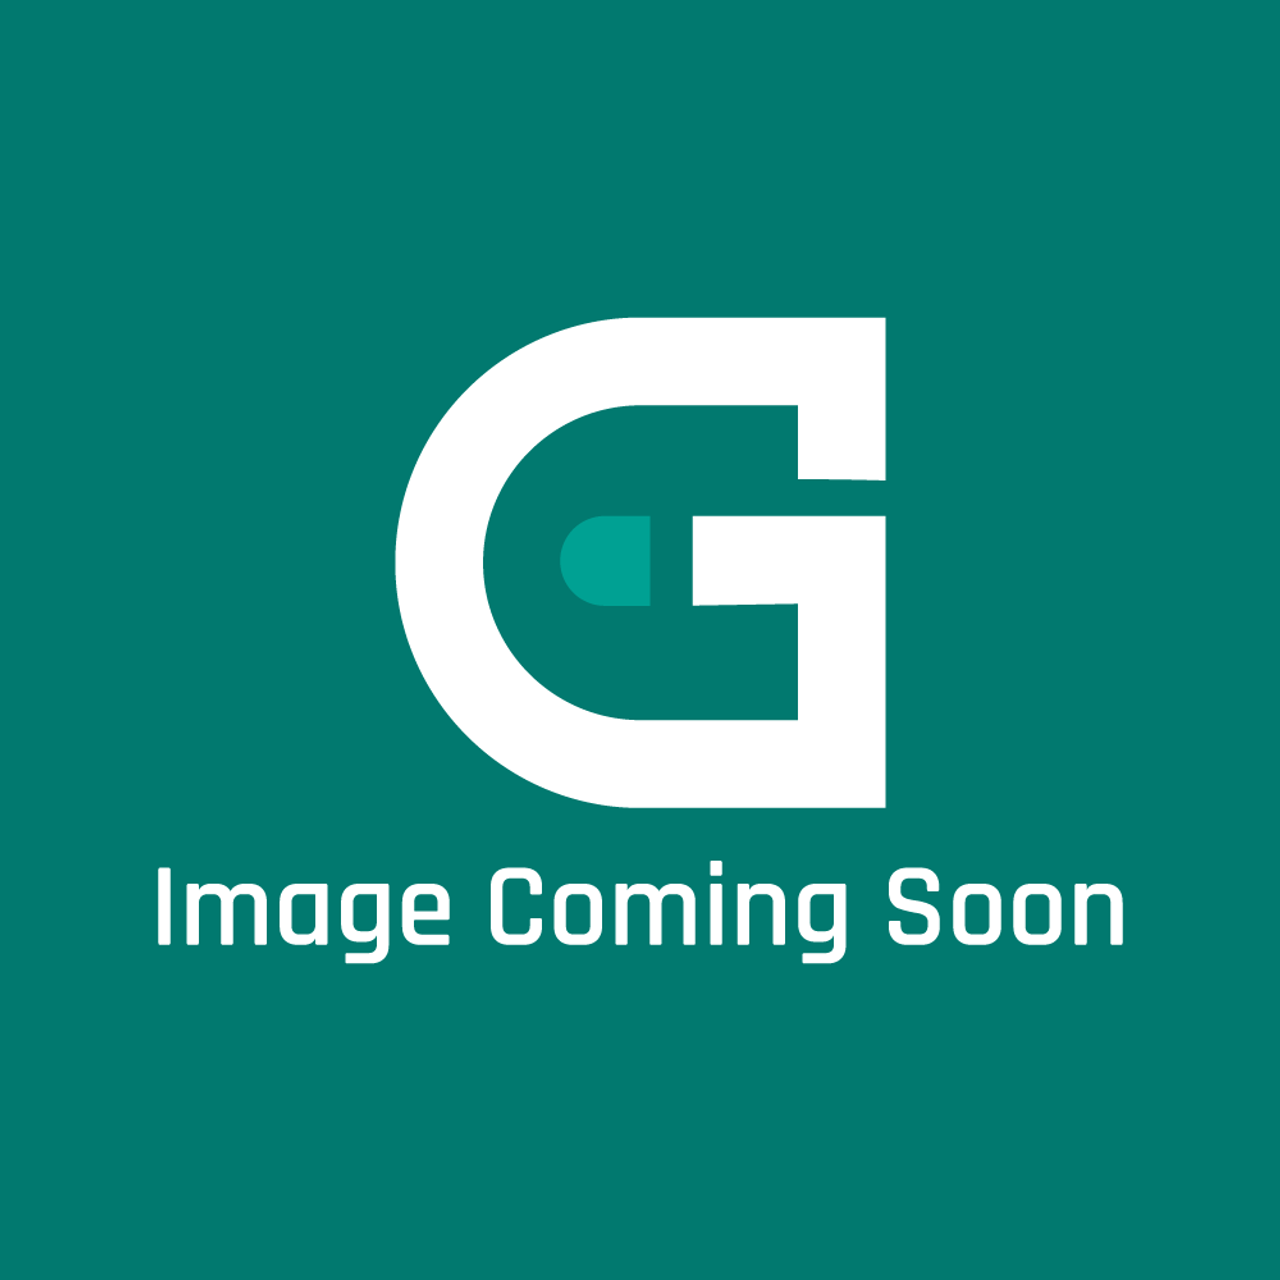 Frigidaire - Electrolux 5304504795 Base - Image Coming Soon!